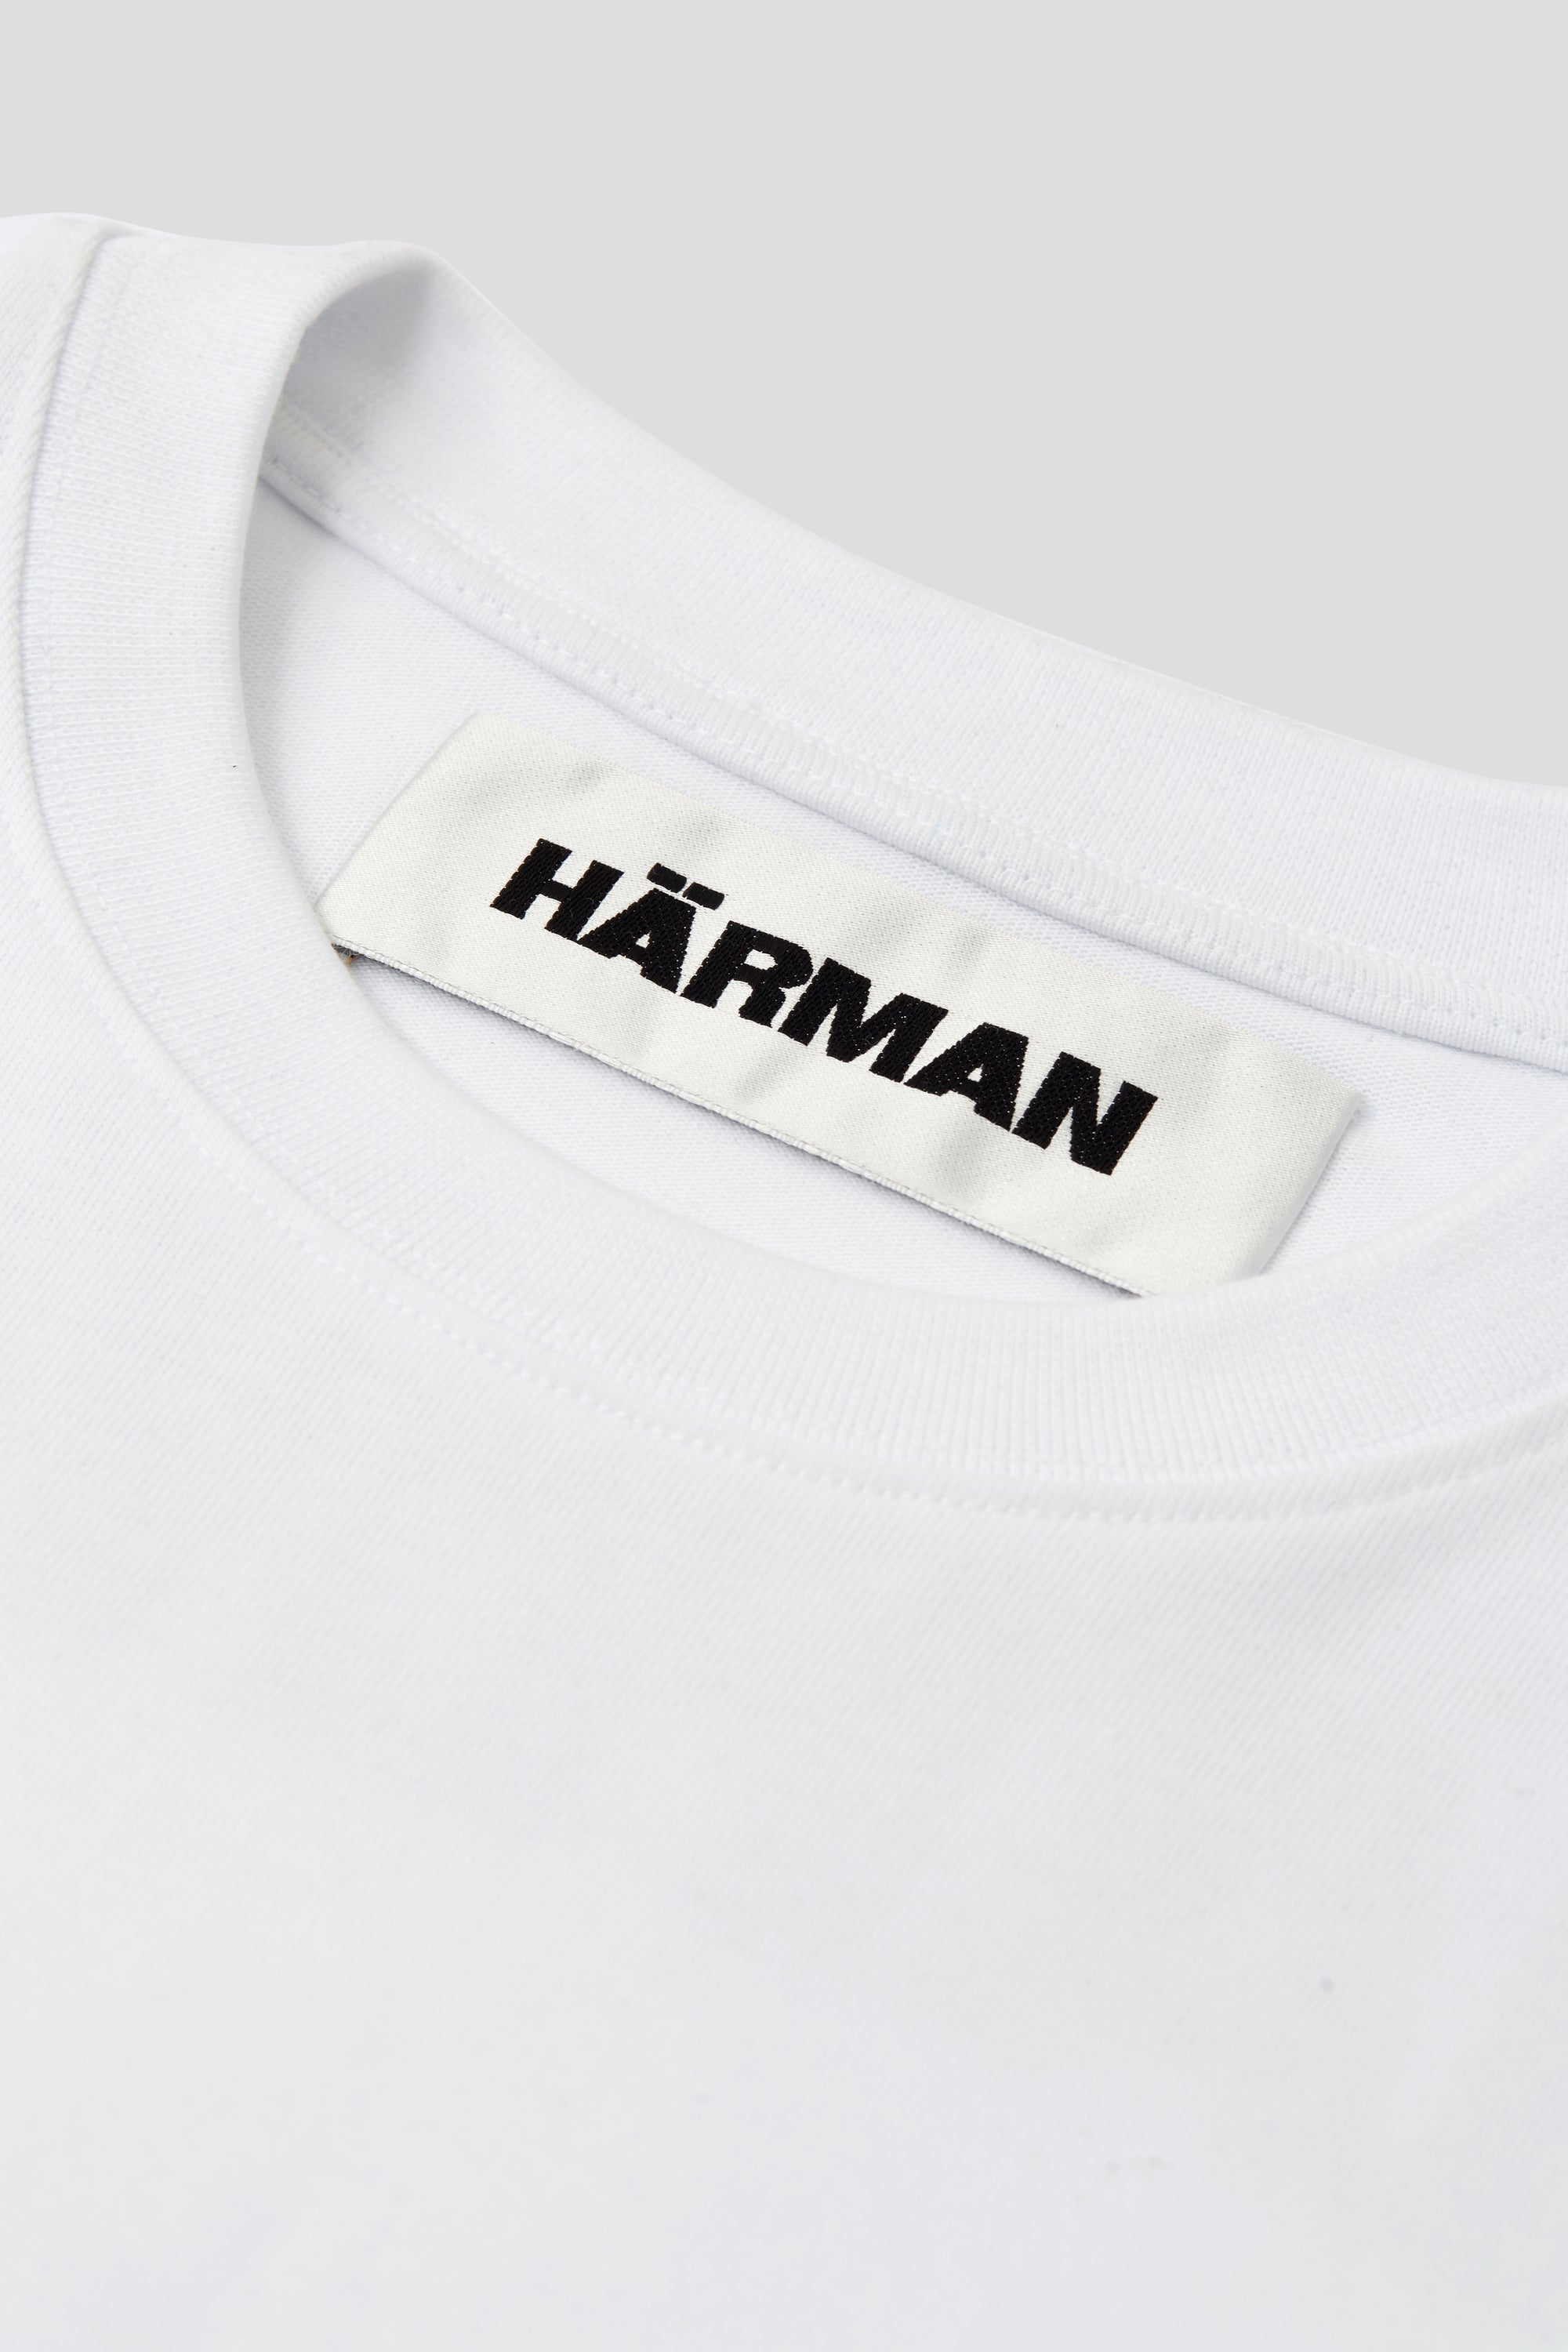 Härman Classic T-Shirt